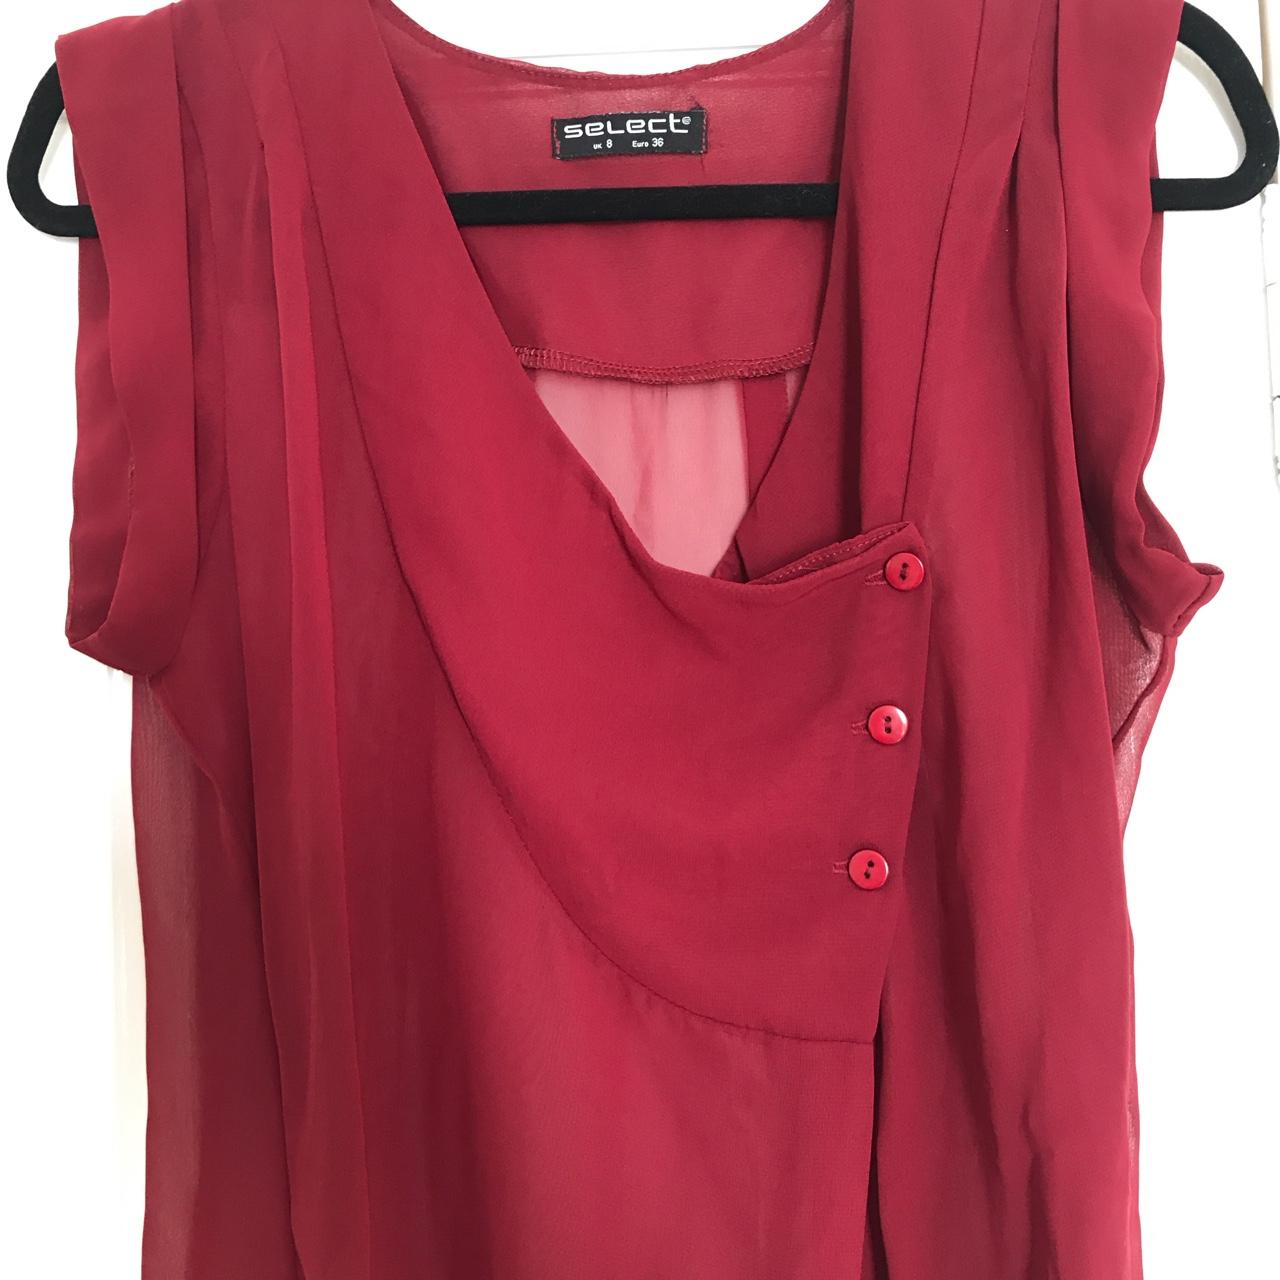 Burgundy sheer blouse ️ Longer at front to sit... - Depop